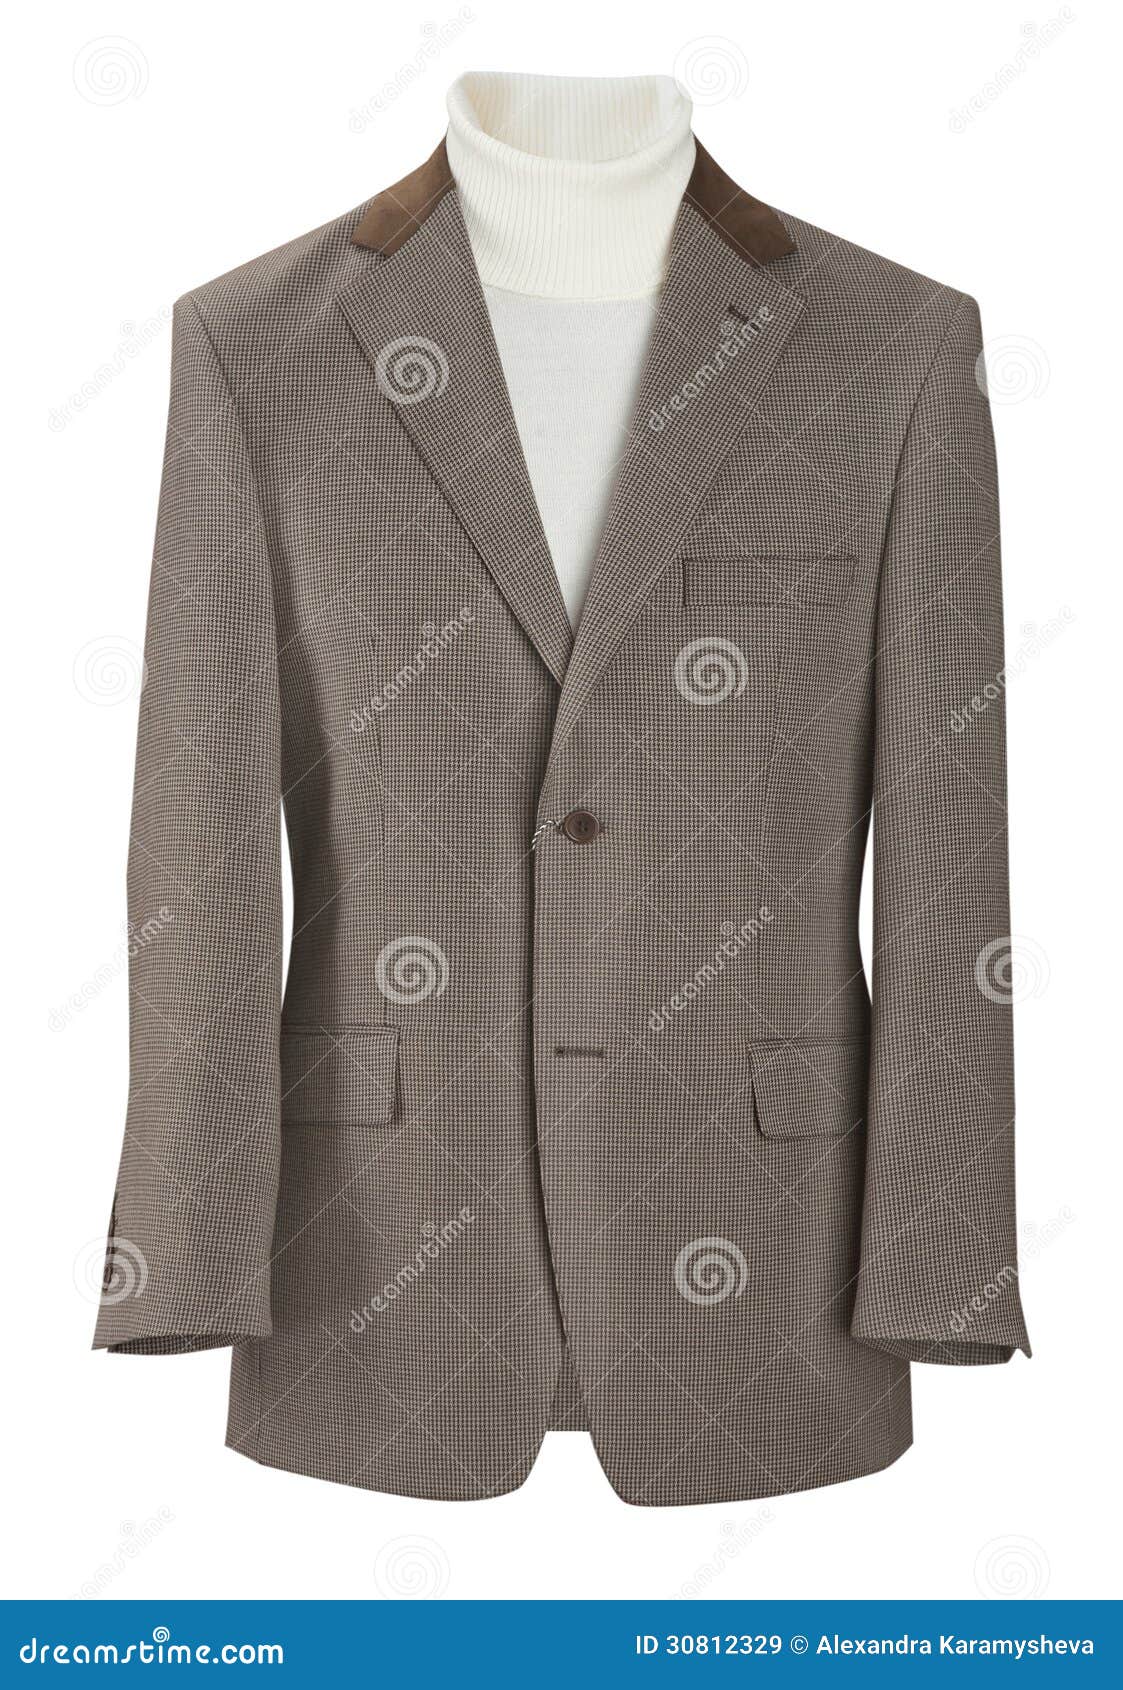 Men s business suit jacket stock image. Image of businessman - 30812329